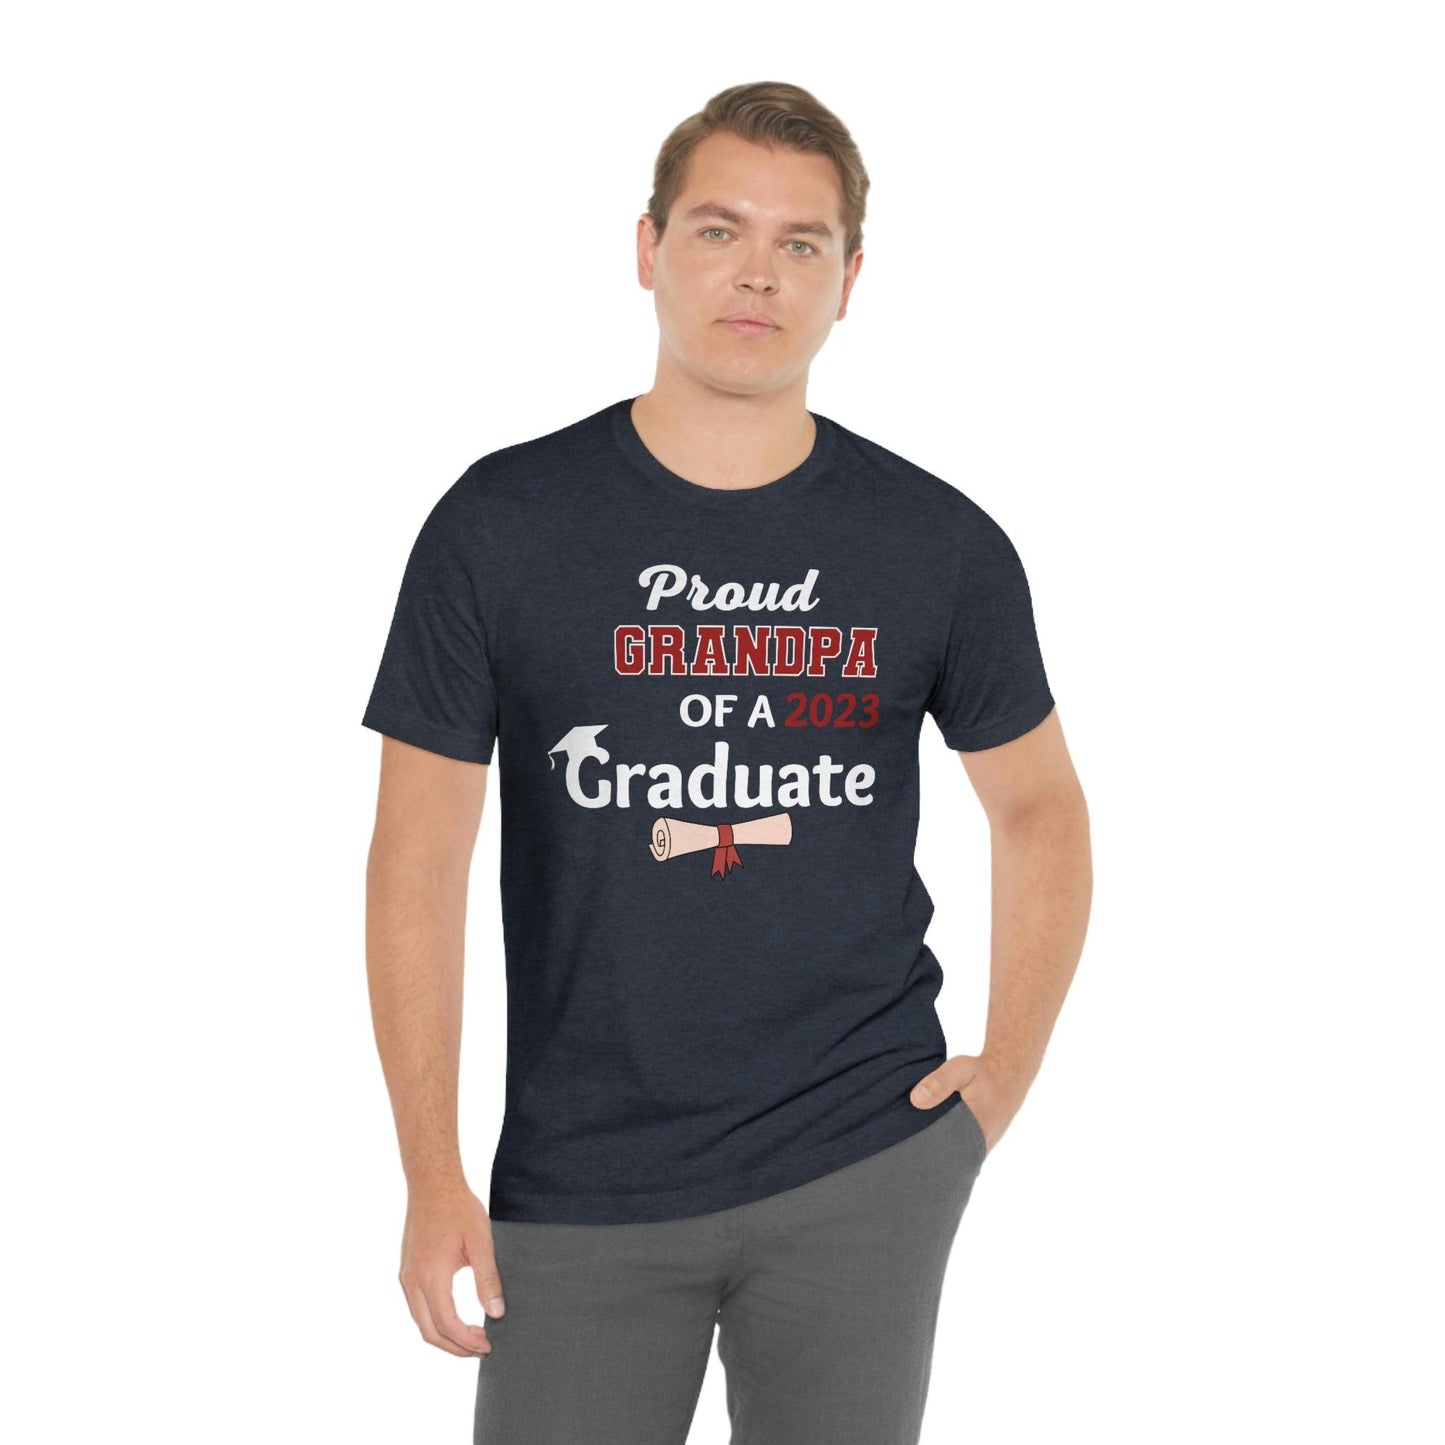 Proud Grandpa of a Graduate shirt - Graduation shirt - Graduation gift